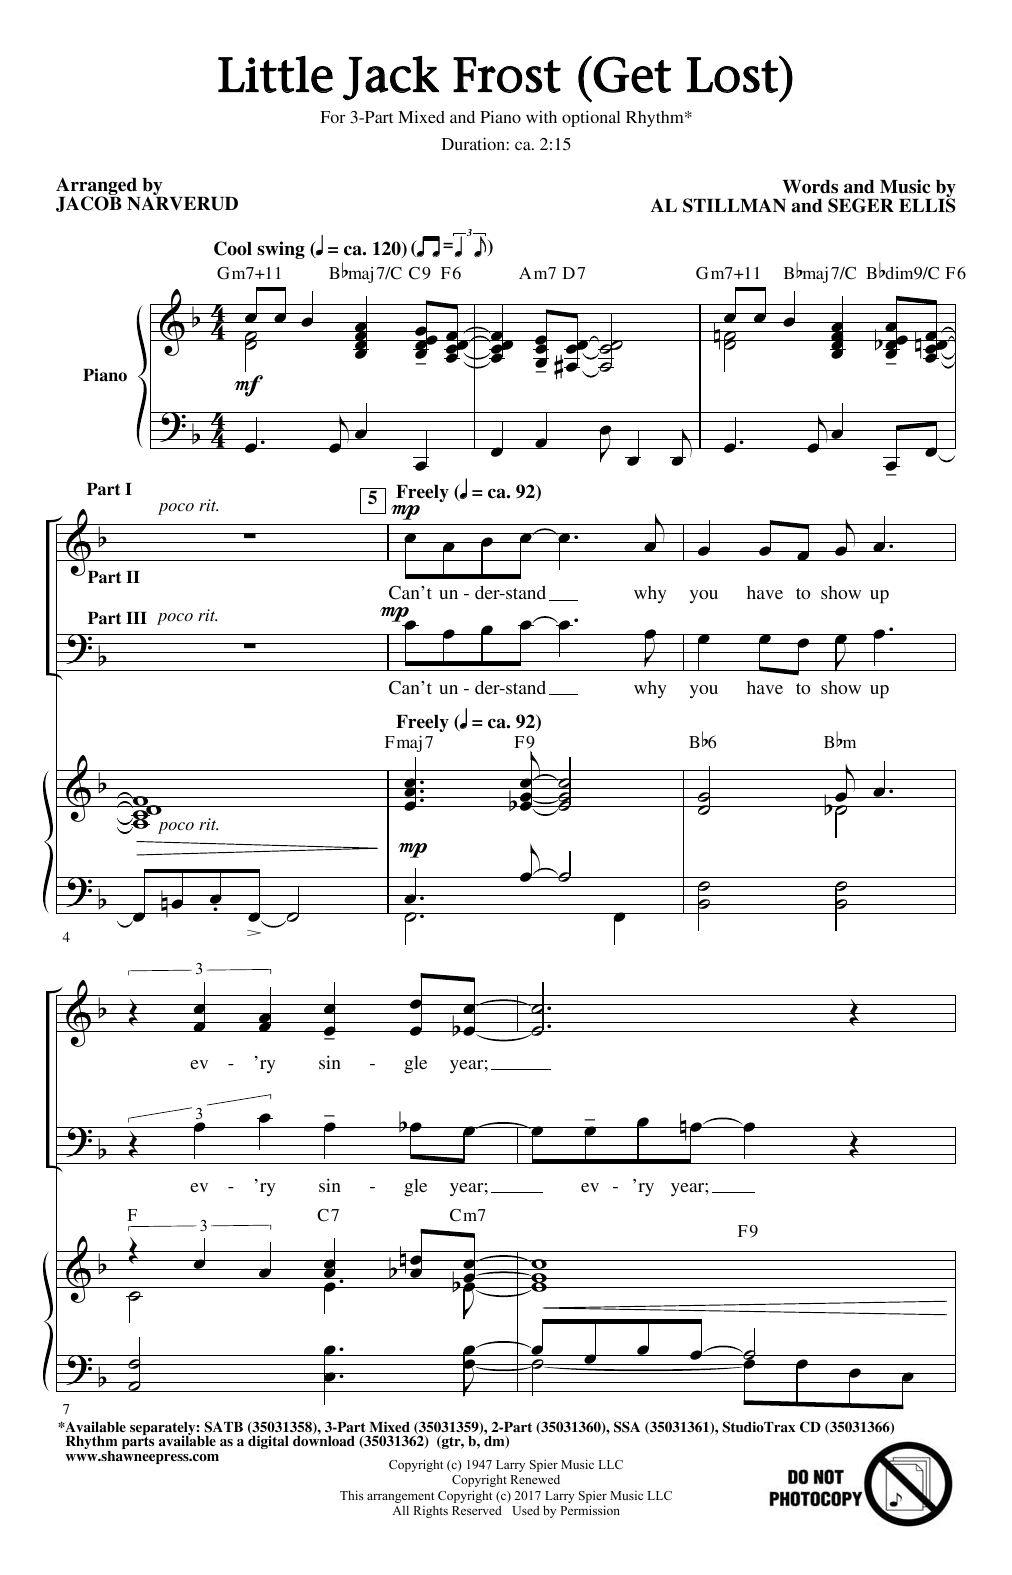 Jacob Narverud Little Jack Frost (Get Lost) Sheet Music Notes & Chords for 2-Part Choir - Download or Print PDF